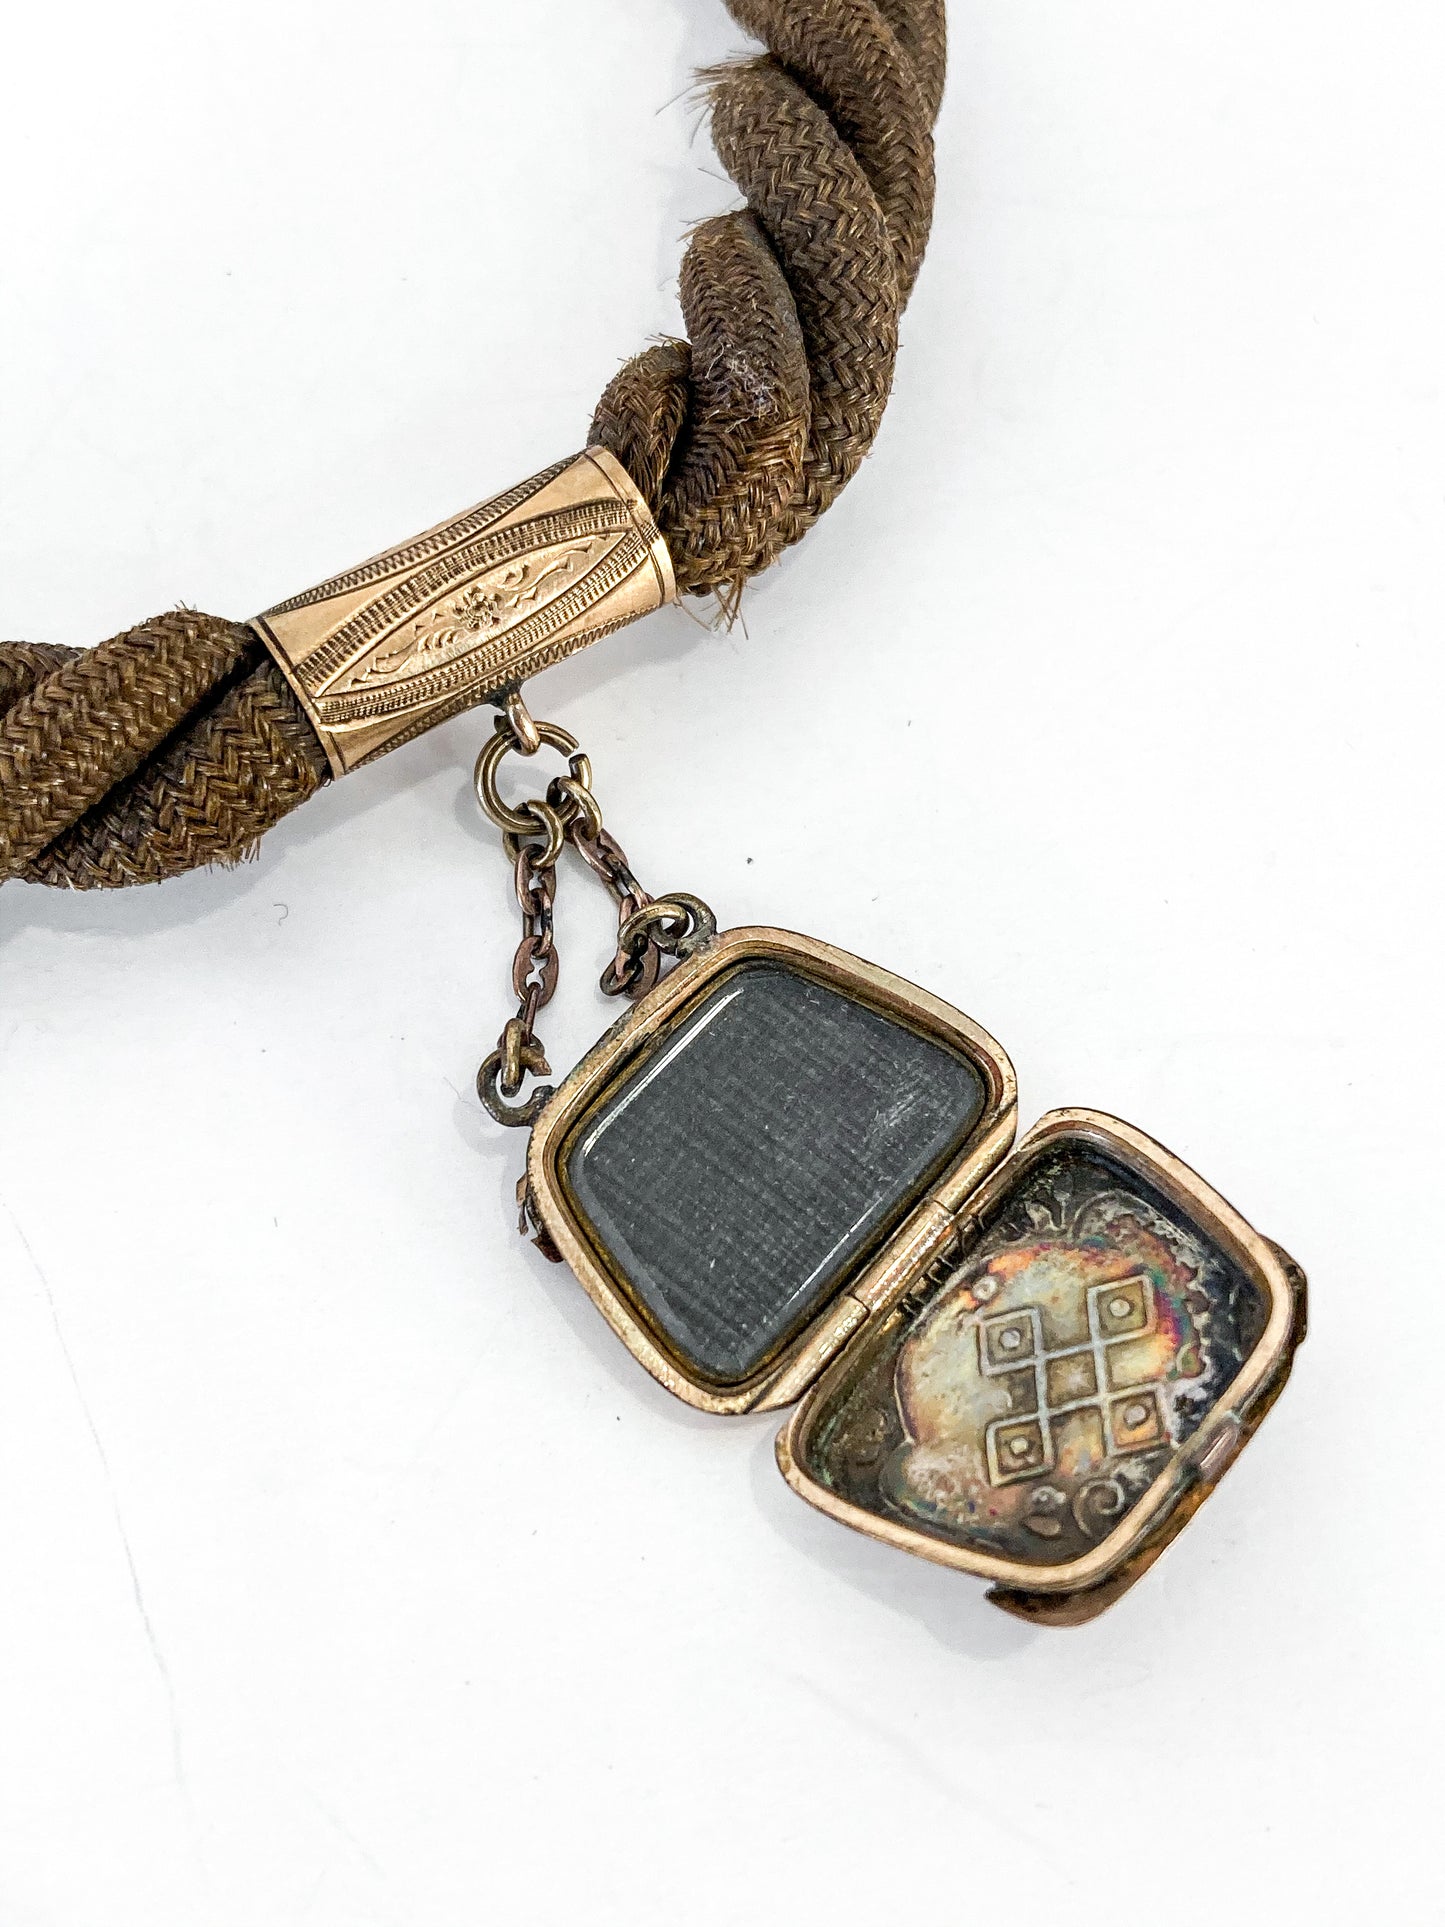 Antique Gold Filled Victorian Hair Braided Mourning Watch Chain Locket Inside Locket